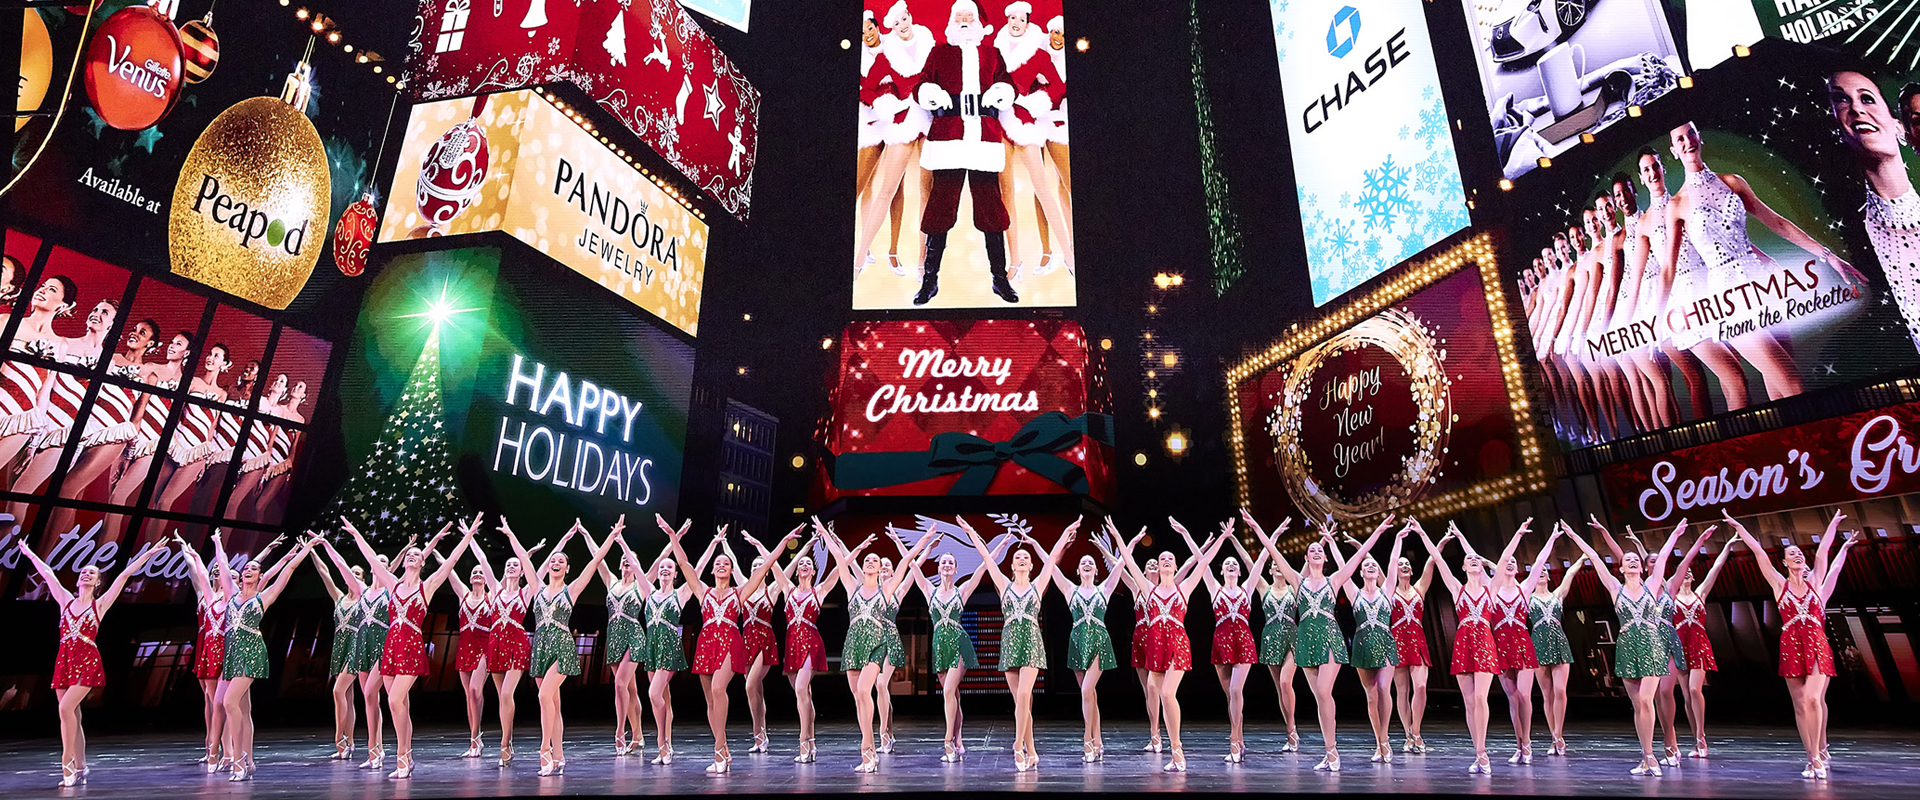 Christmas Spectacular Starring The Radio City Rockettes   New York, NY   Photo@ Radio City Music Hall